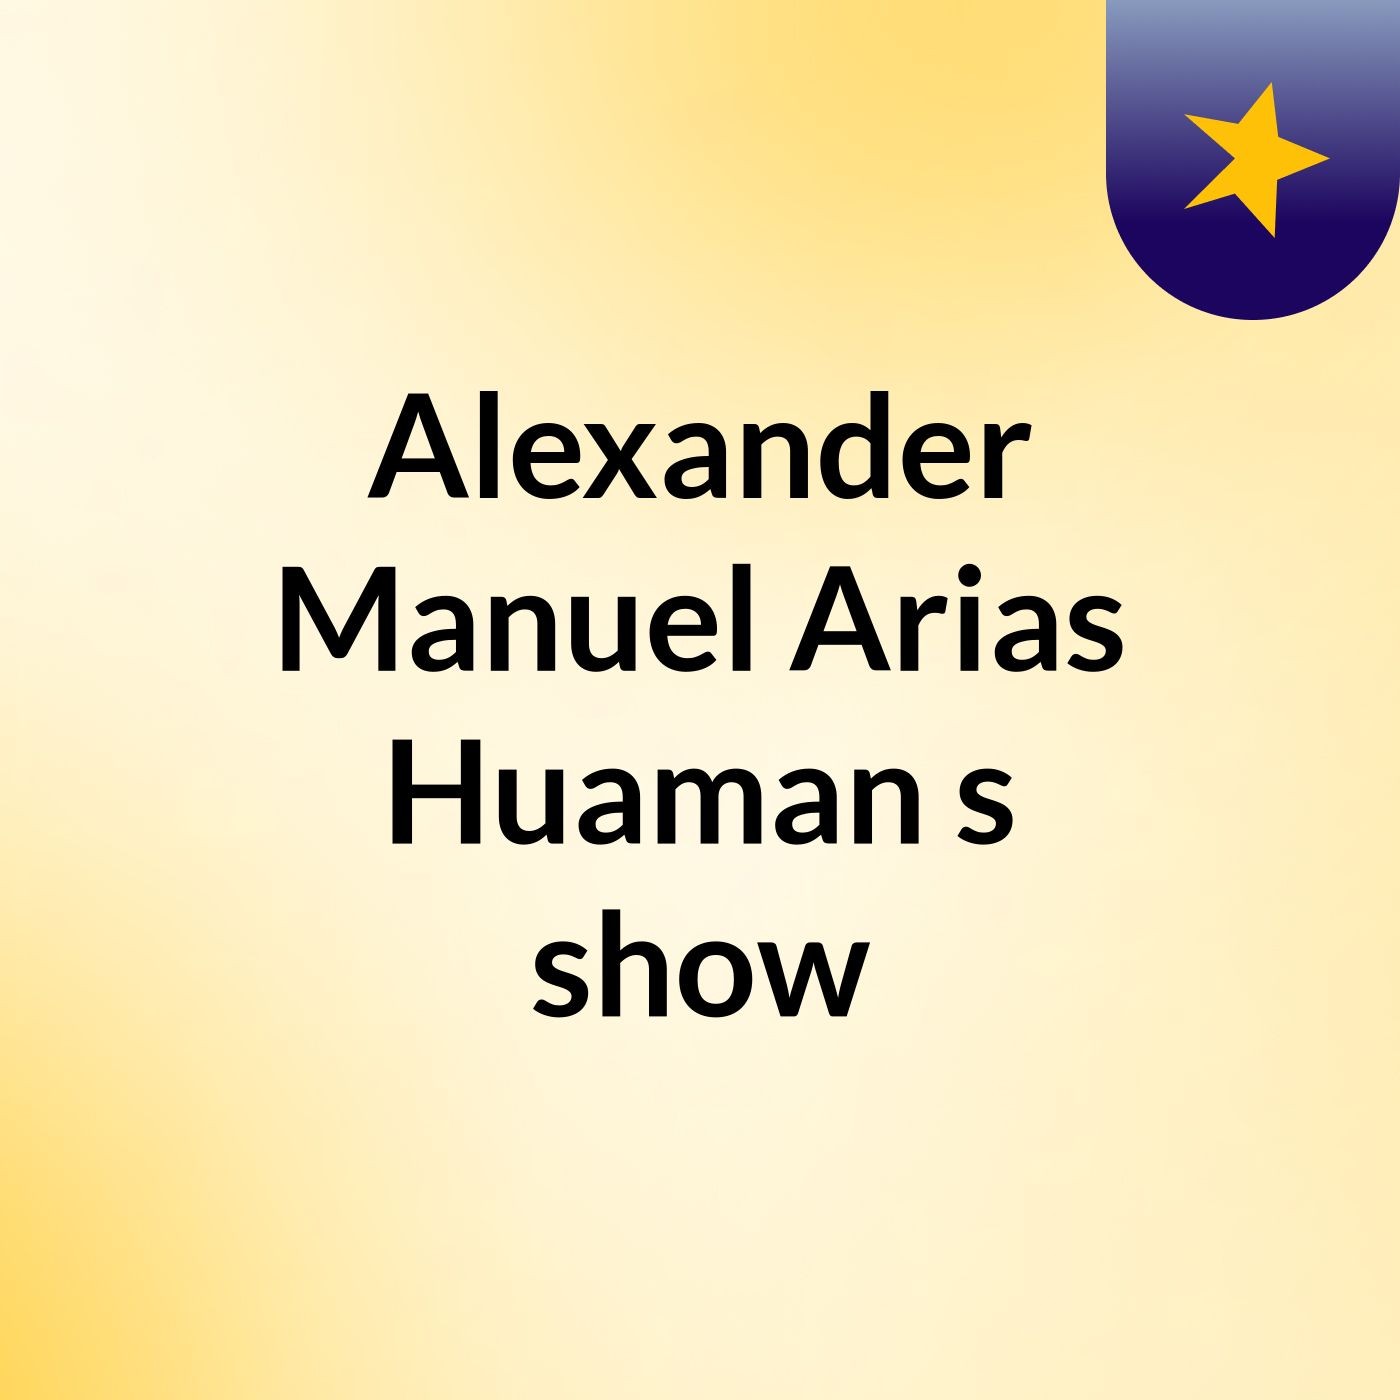 Alexander Manuel Arias Huaman's show